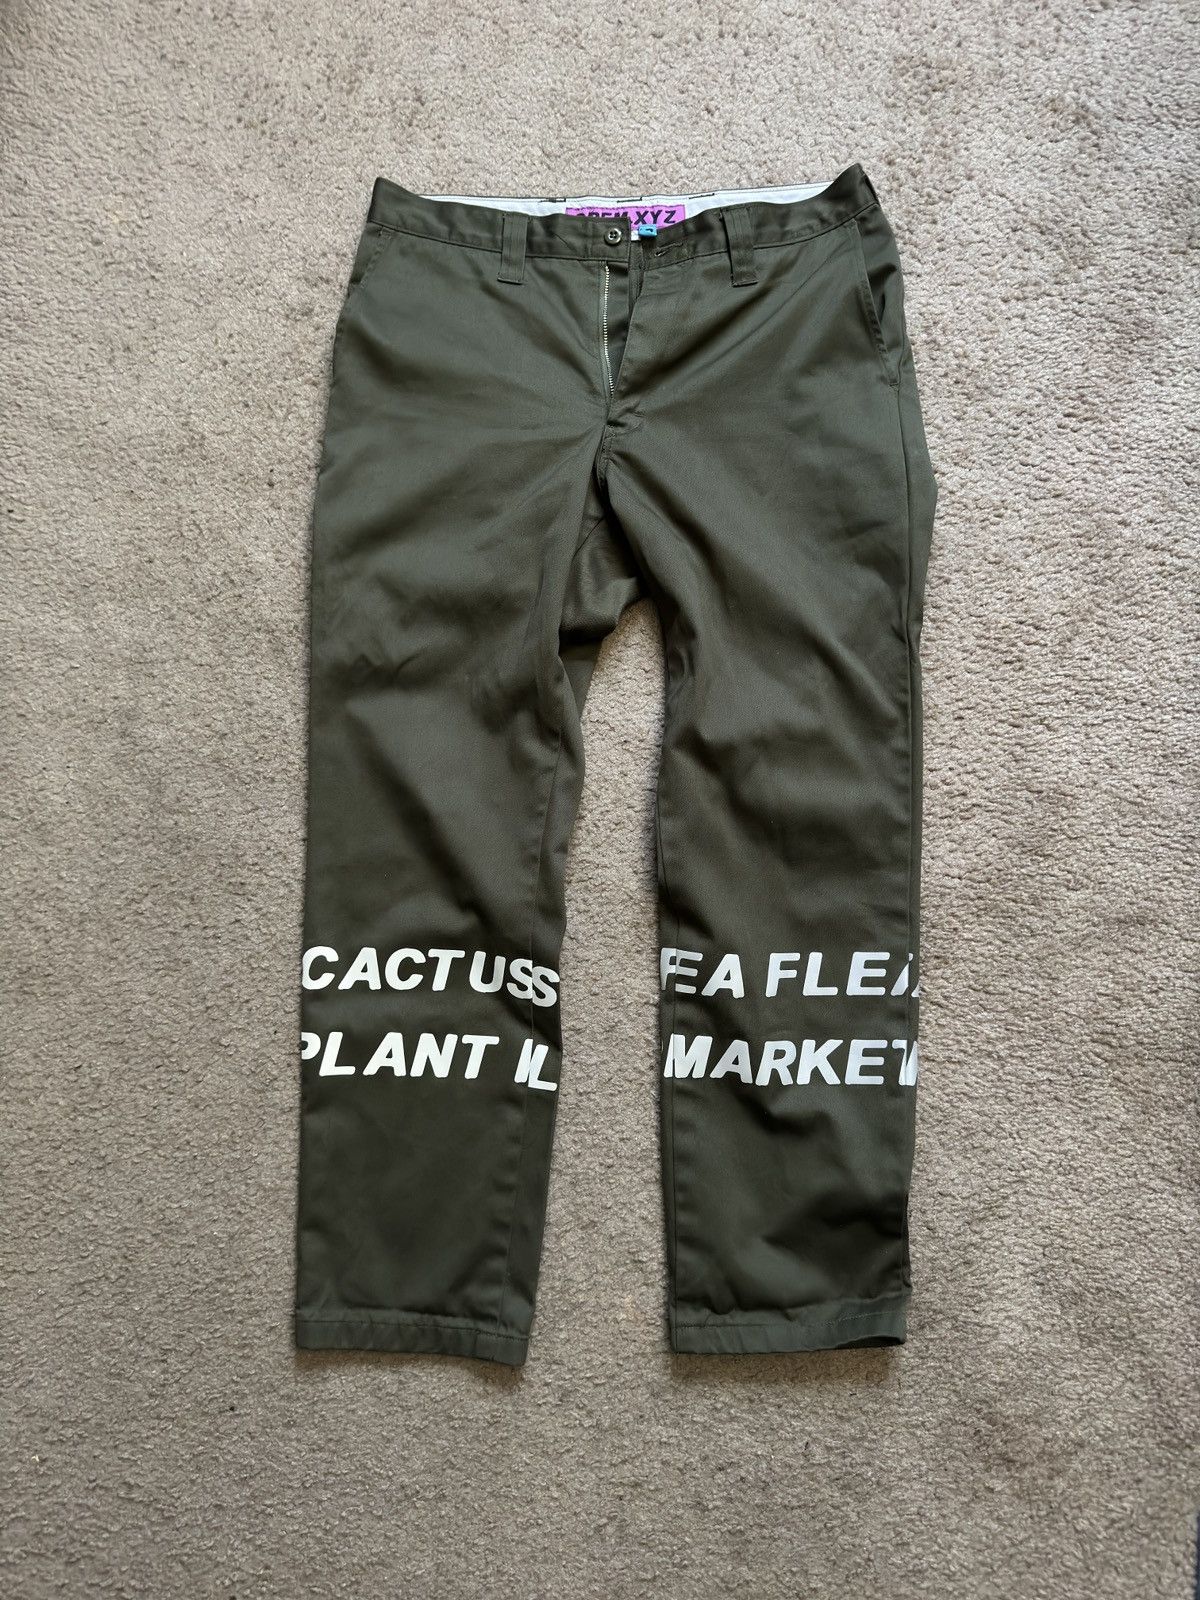 Cactus Plant Flea Market CPFM HI-Vis Pants Green | Grailed